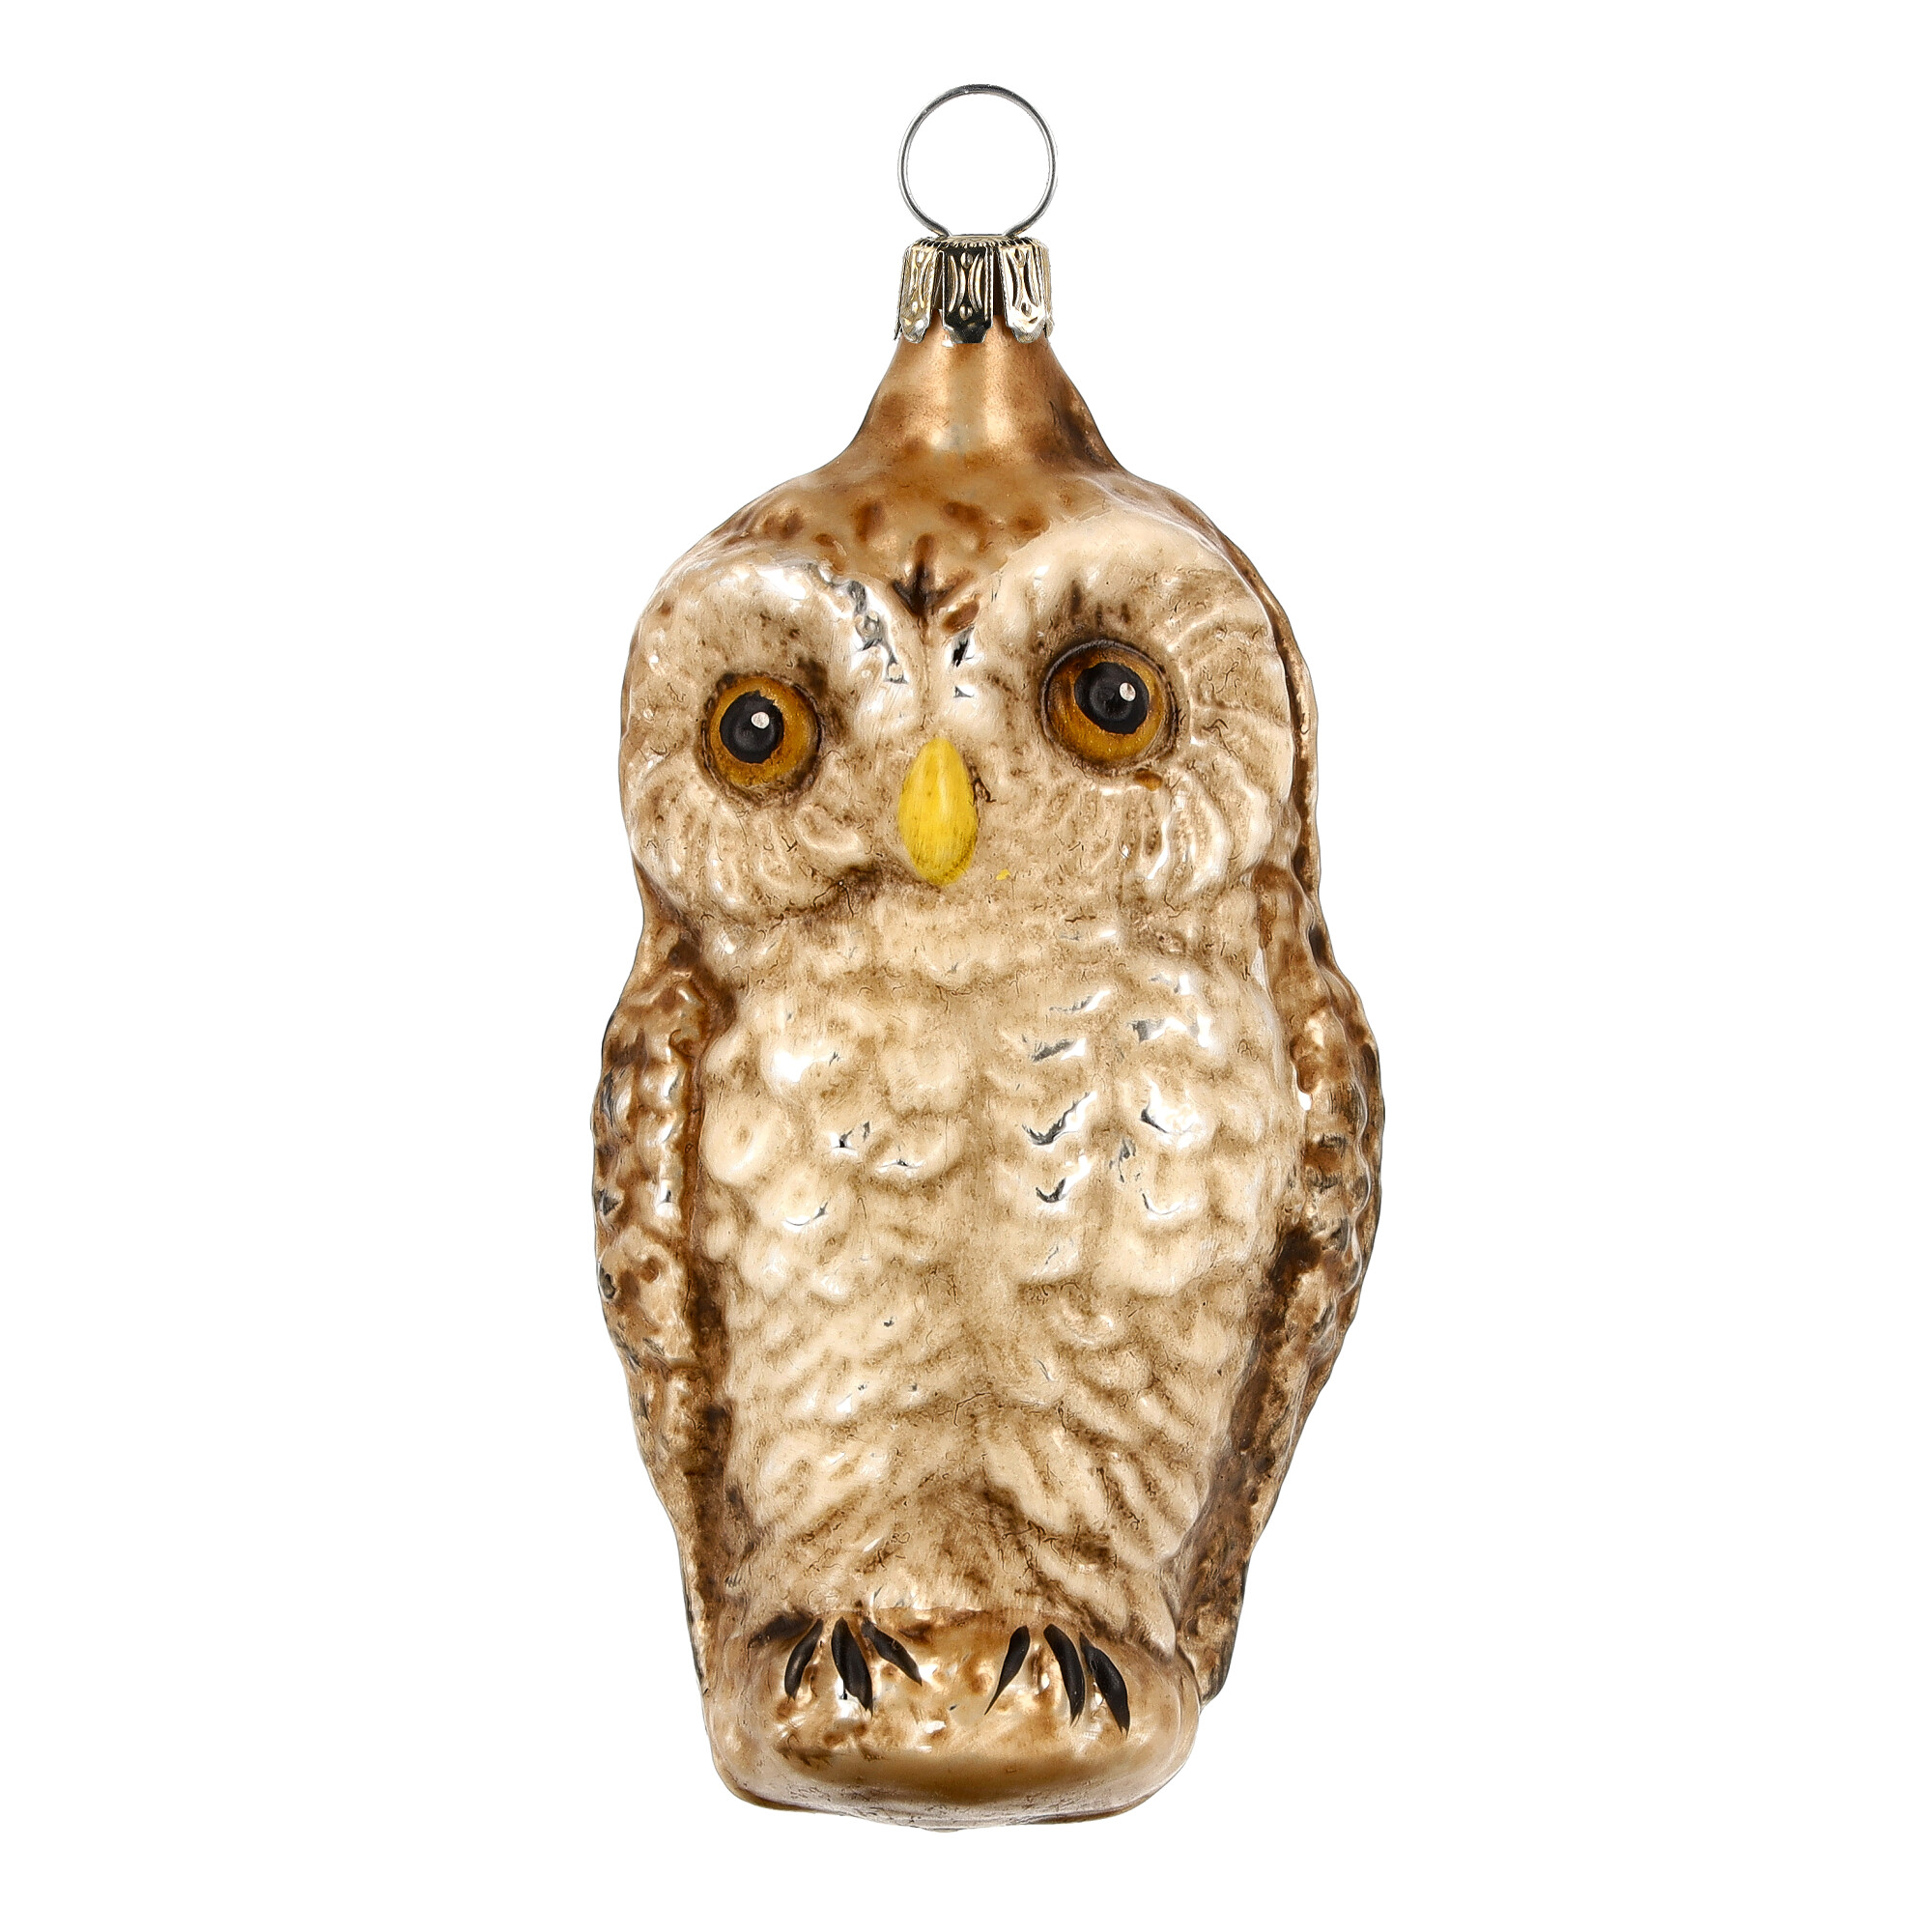 Retro Vintage style Christmas Glass Ornament - Owl